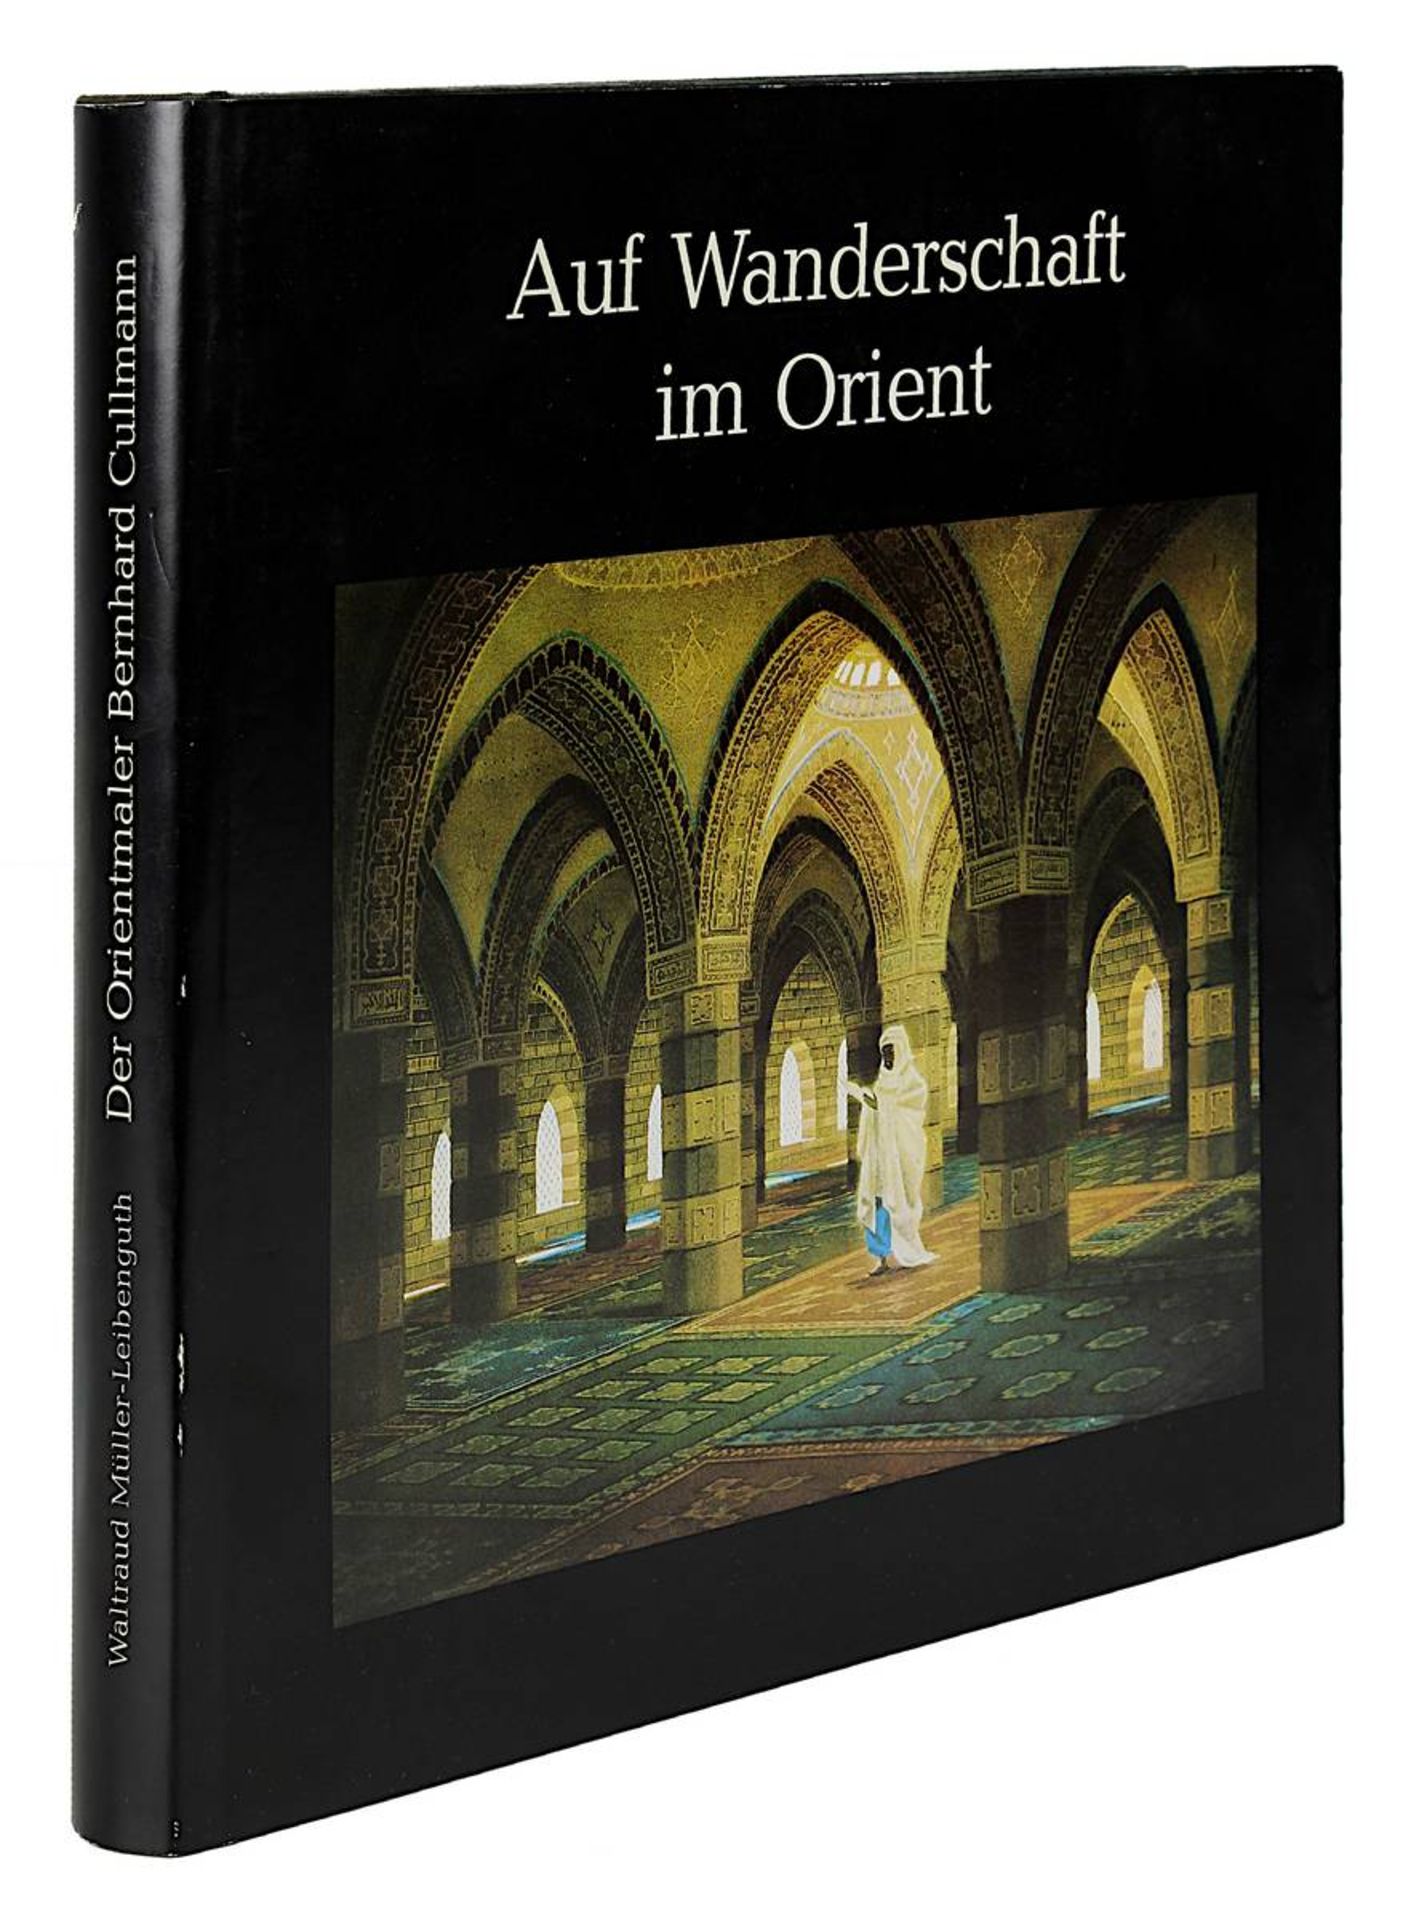 Cullman, Alexander Hrsg. / Müller-Leibenguth, Waltraud "Auf Wanderschaft im Orient", Bernhard